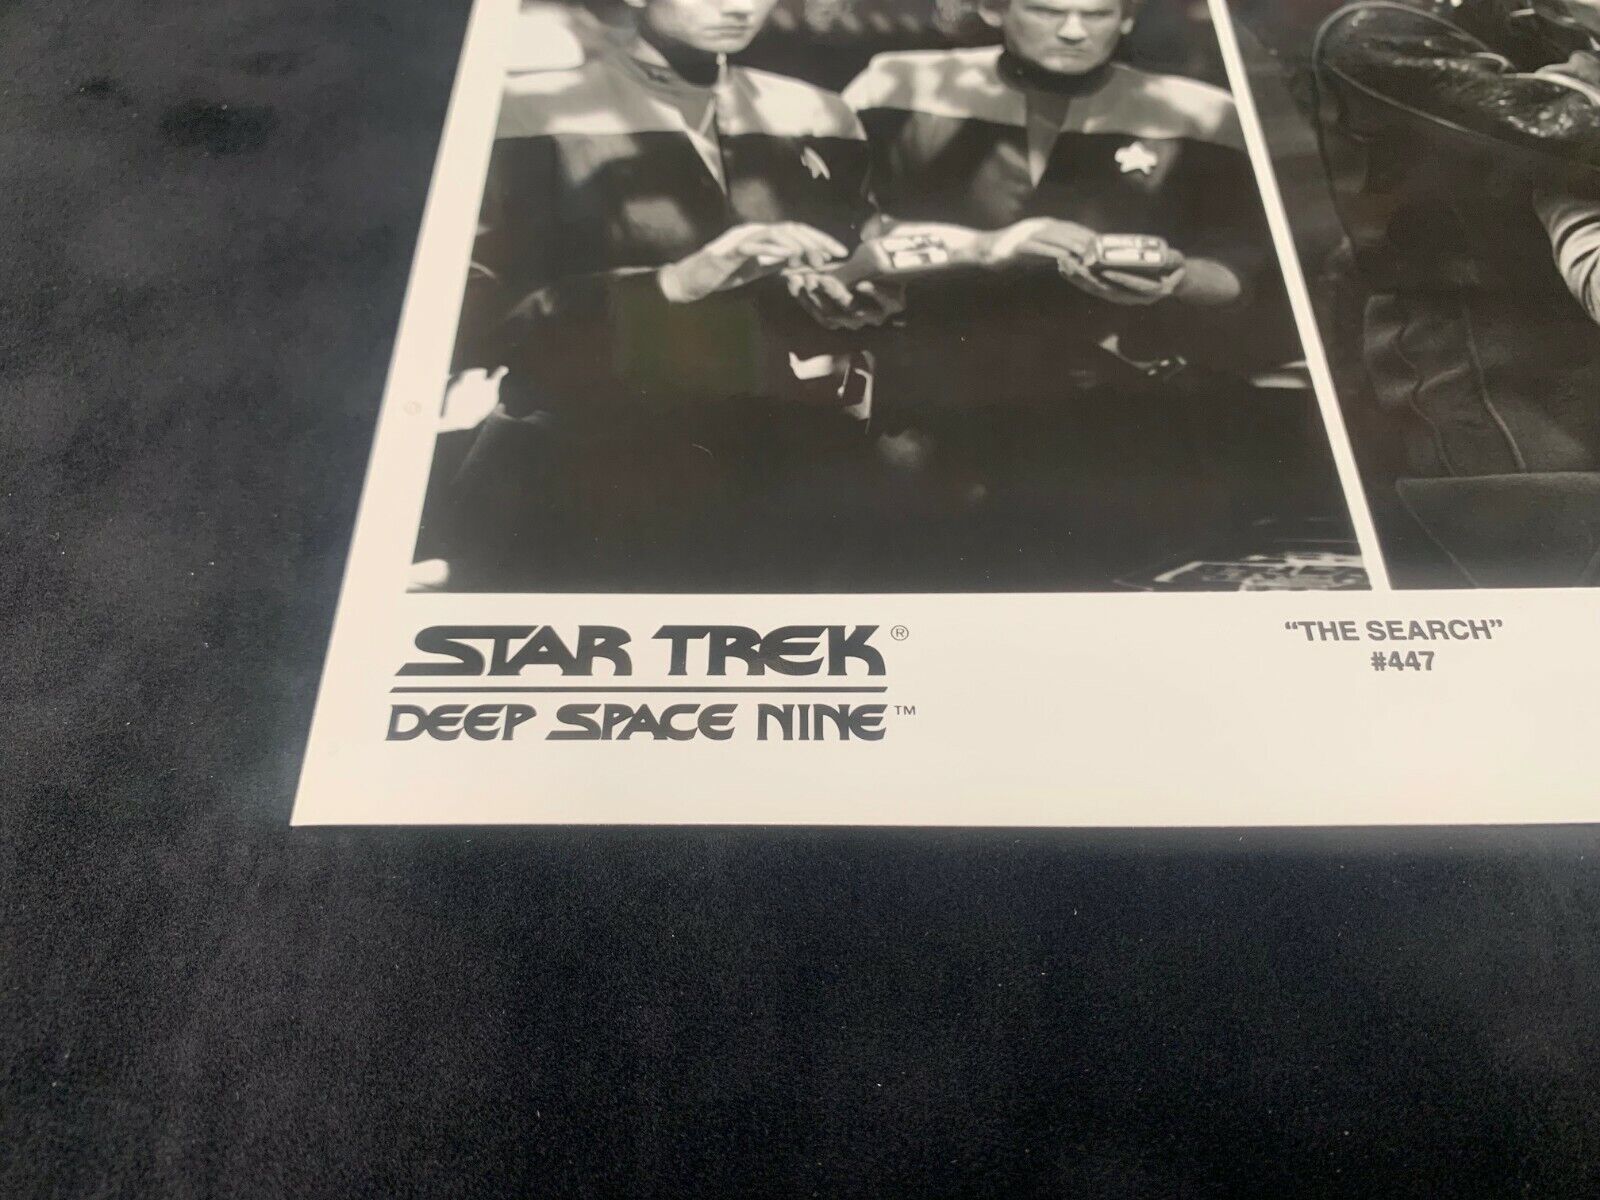 Star Trek Deep Space Nine 8x10 B&W Photo of The Search 447 Photo B